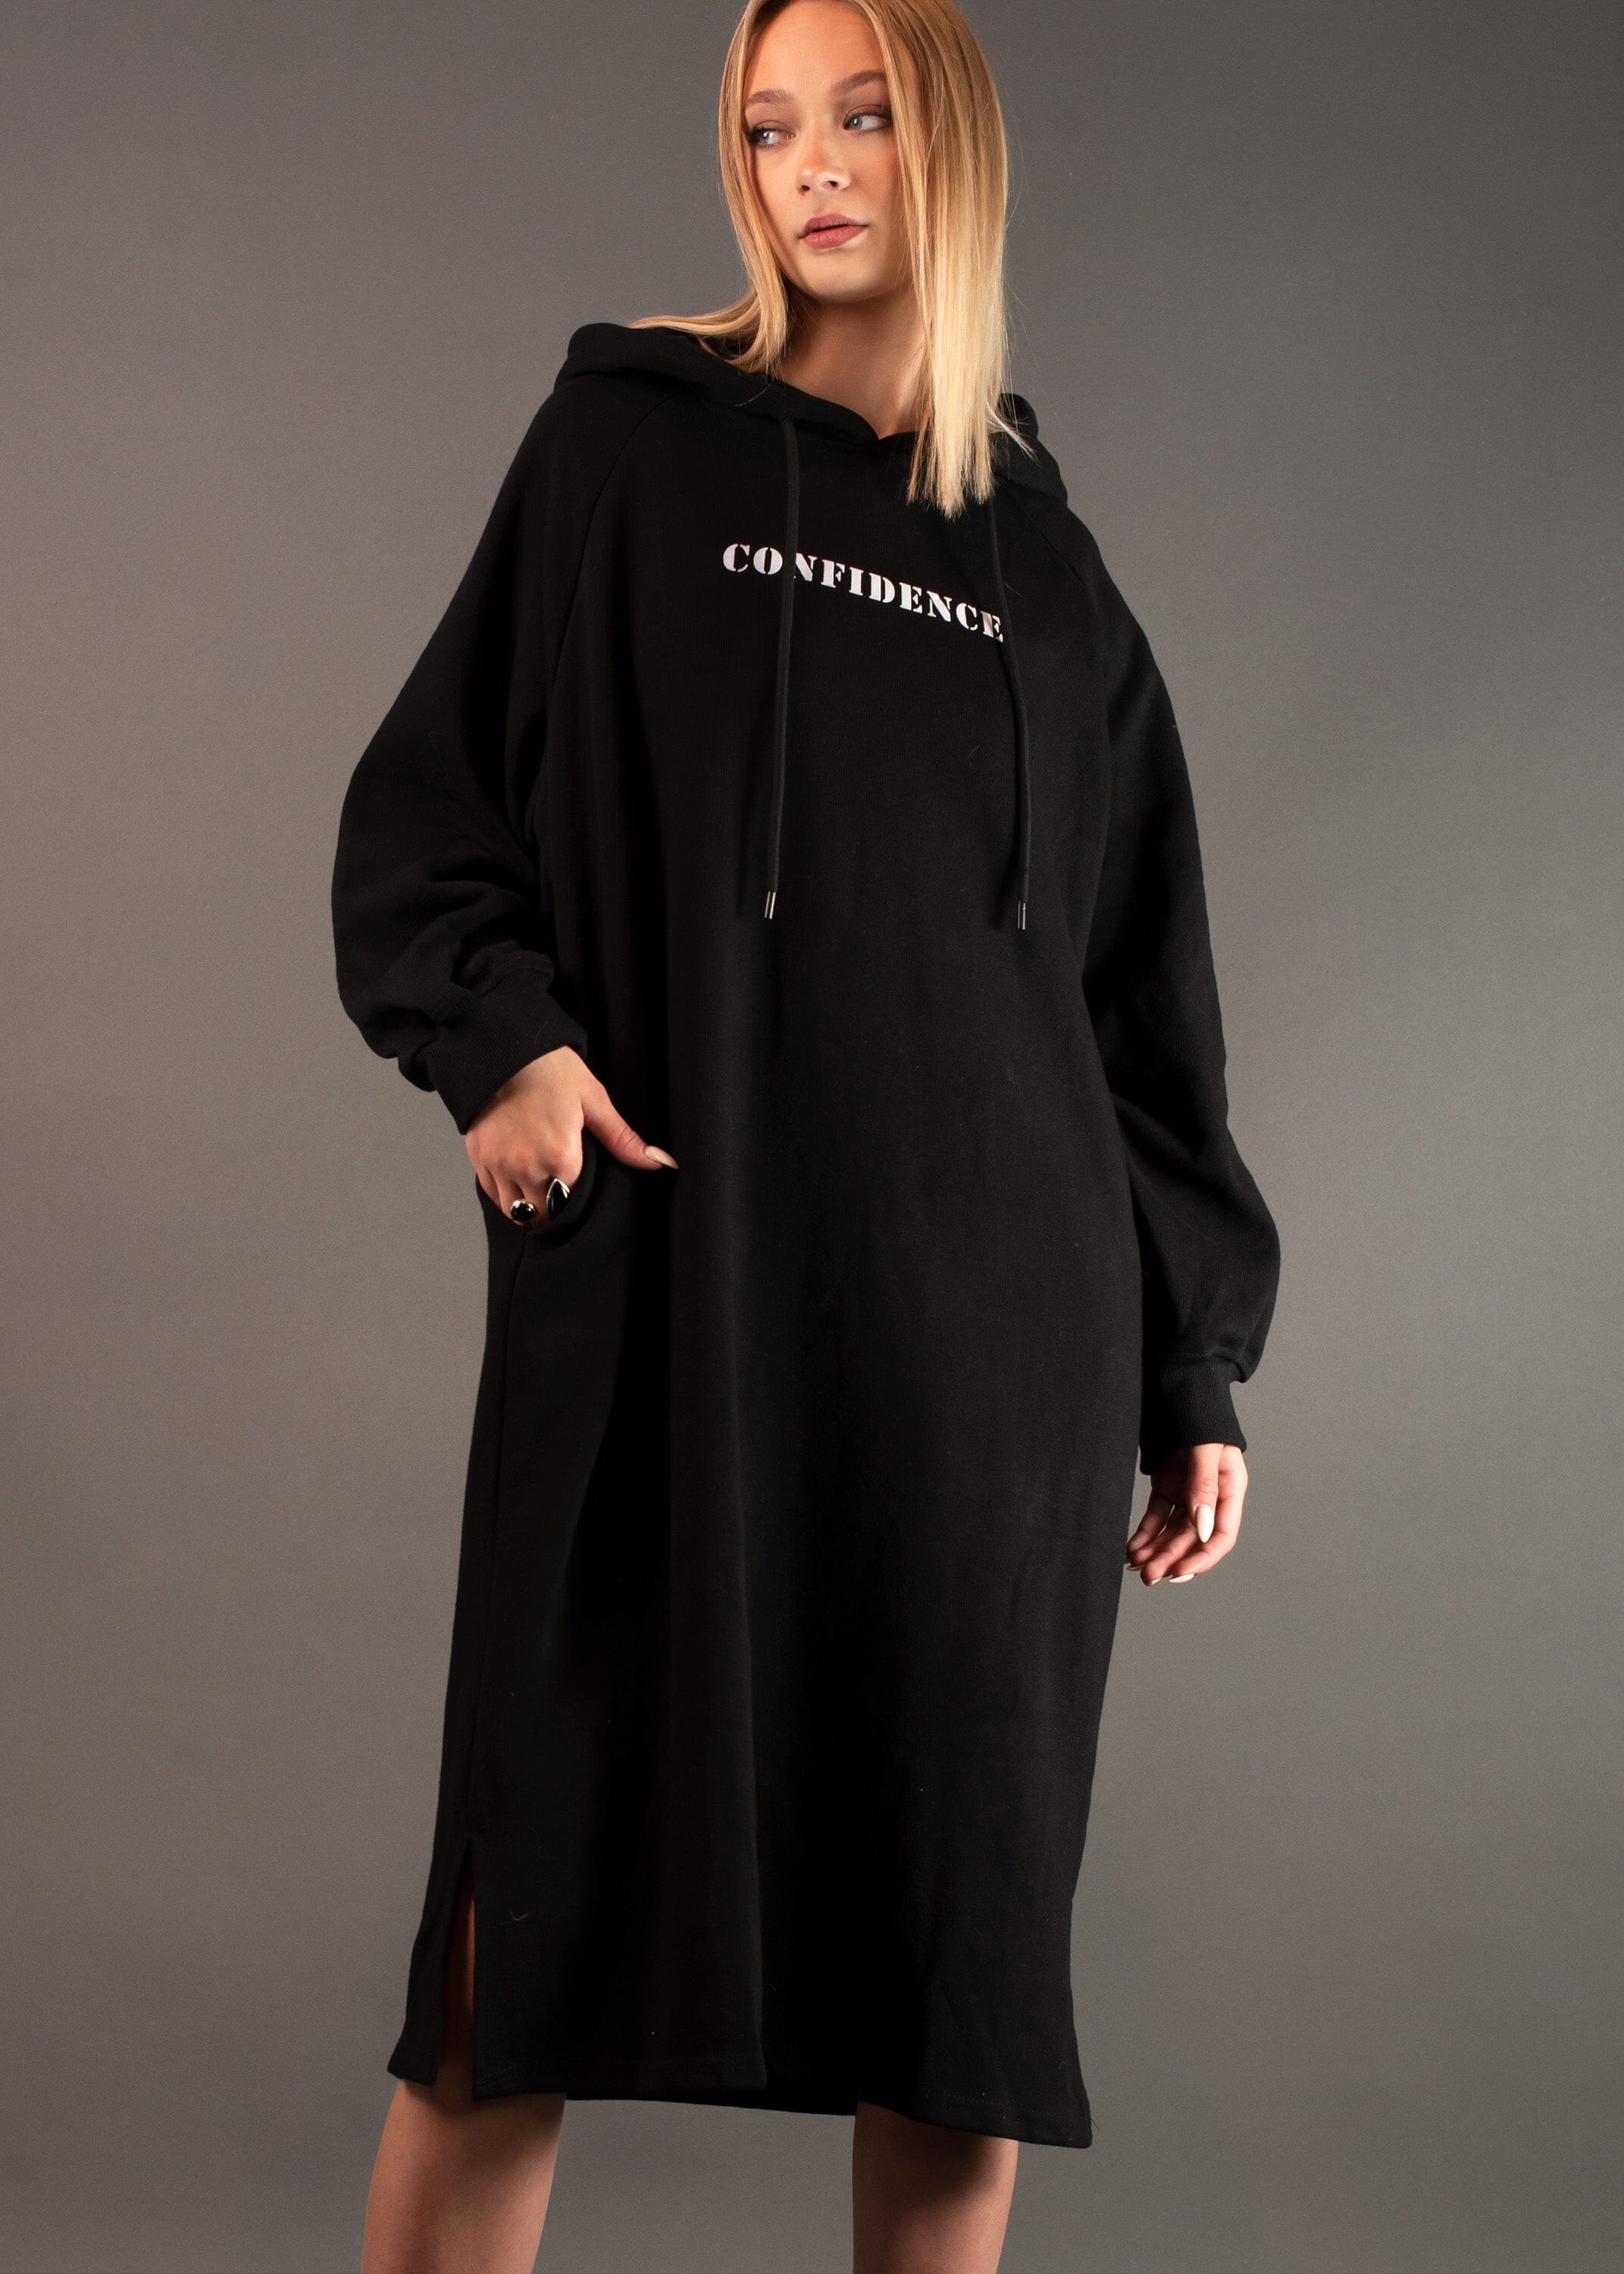 Confidence Sweatshirt Dress Dresses Kate Hewko One Size Black 